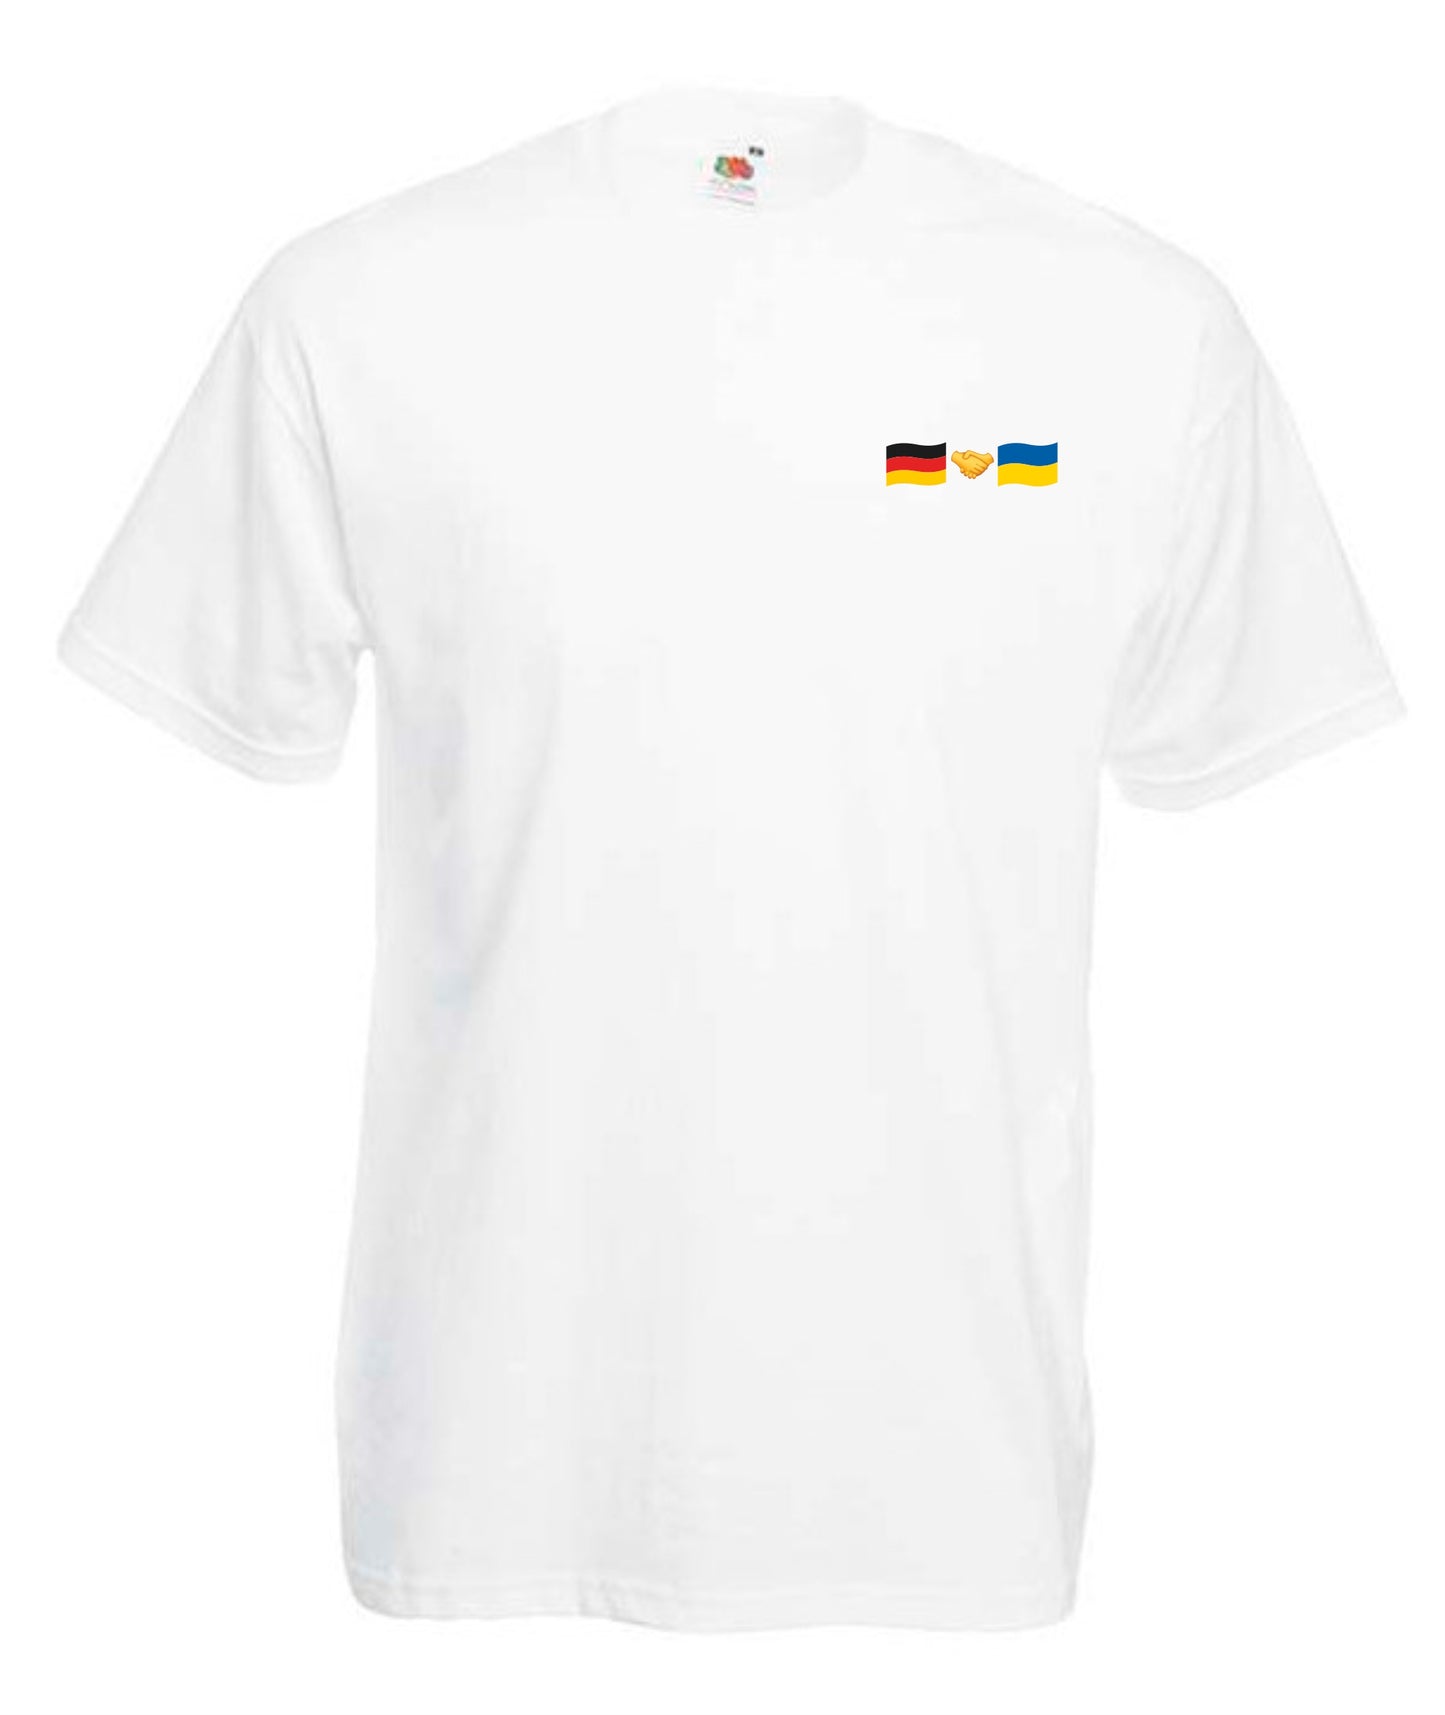 T-shirt Germany + Ukraine (small logo)